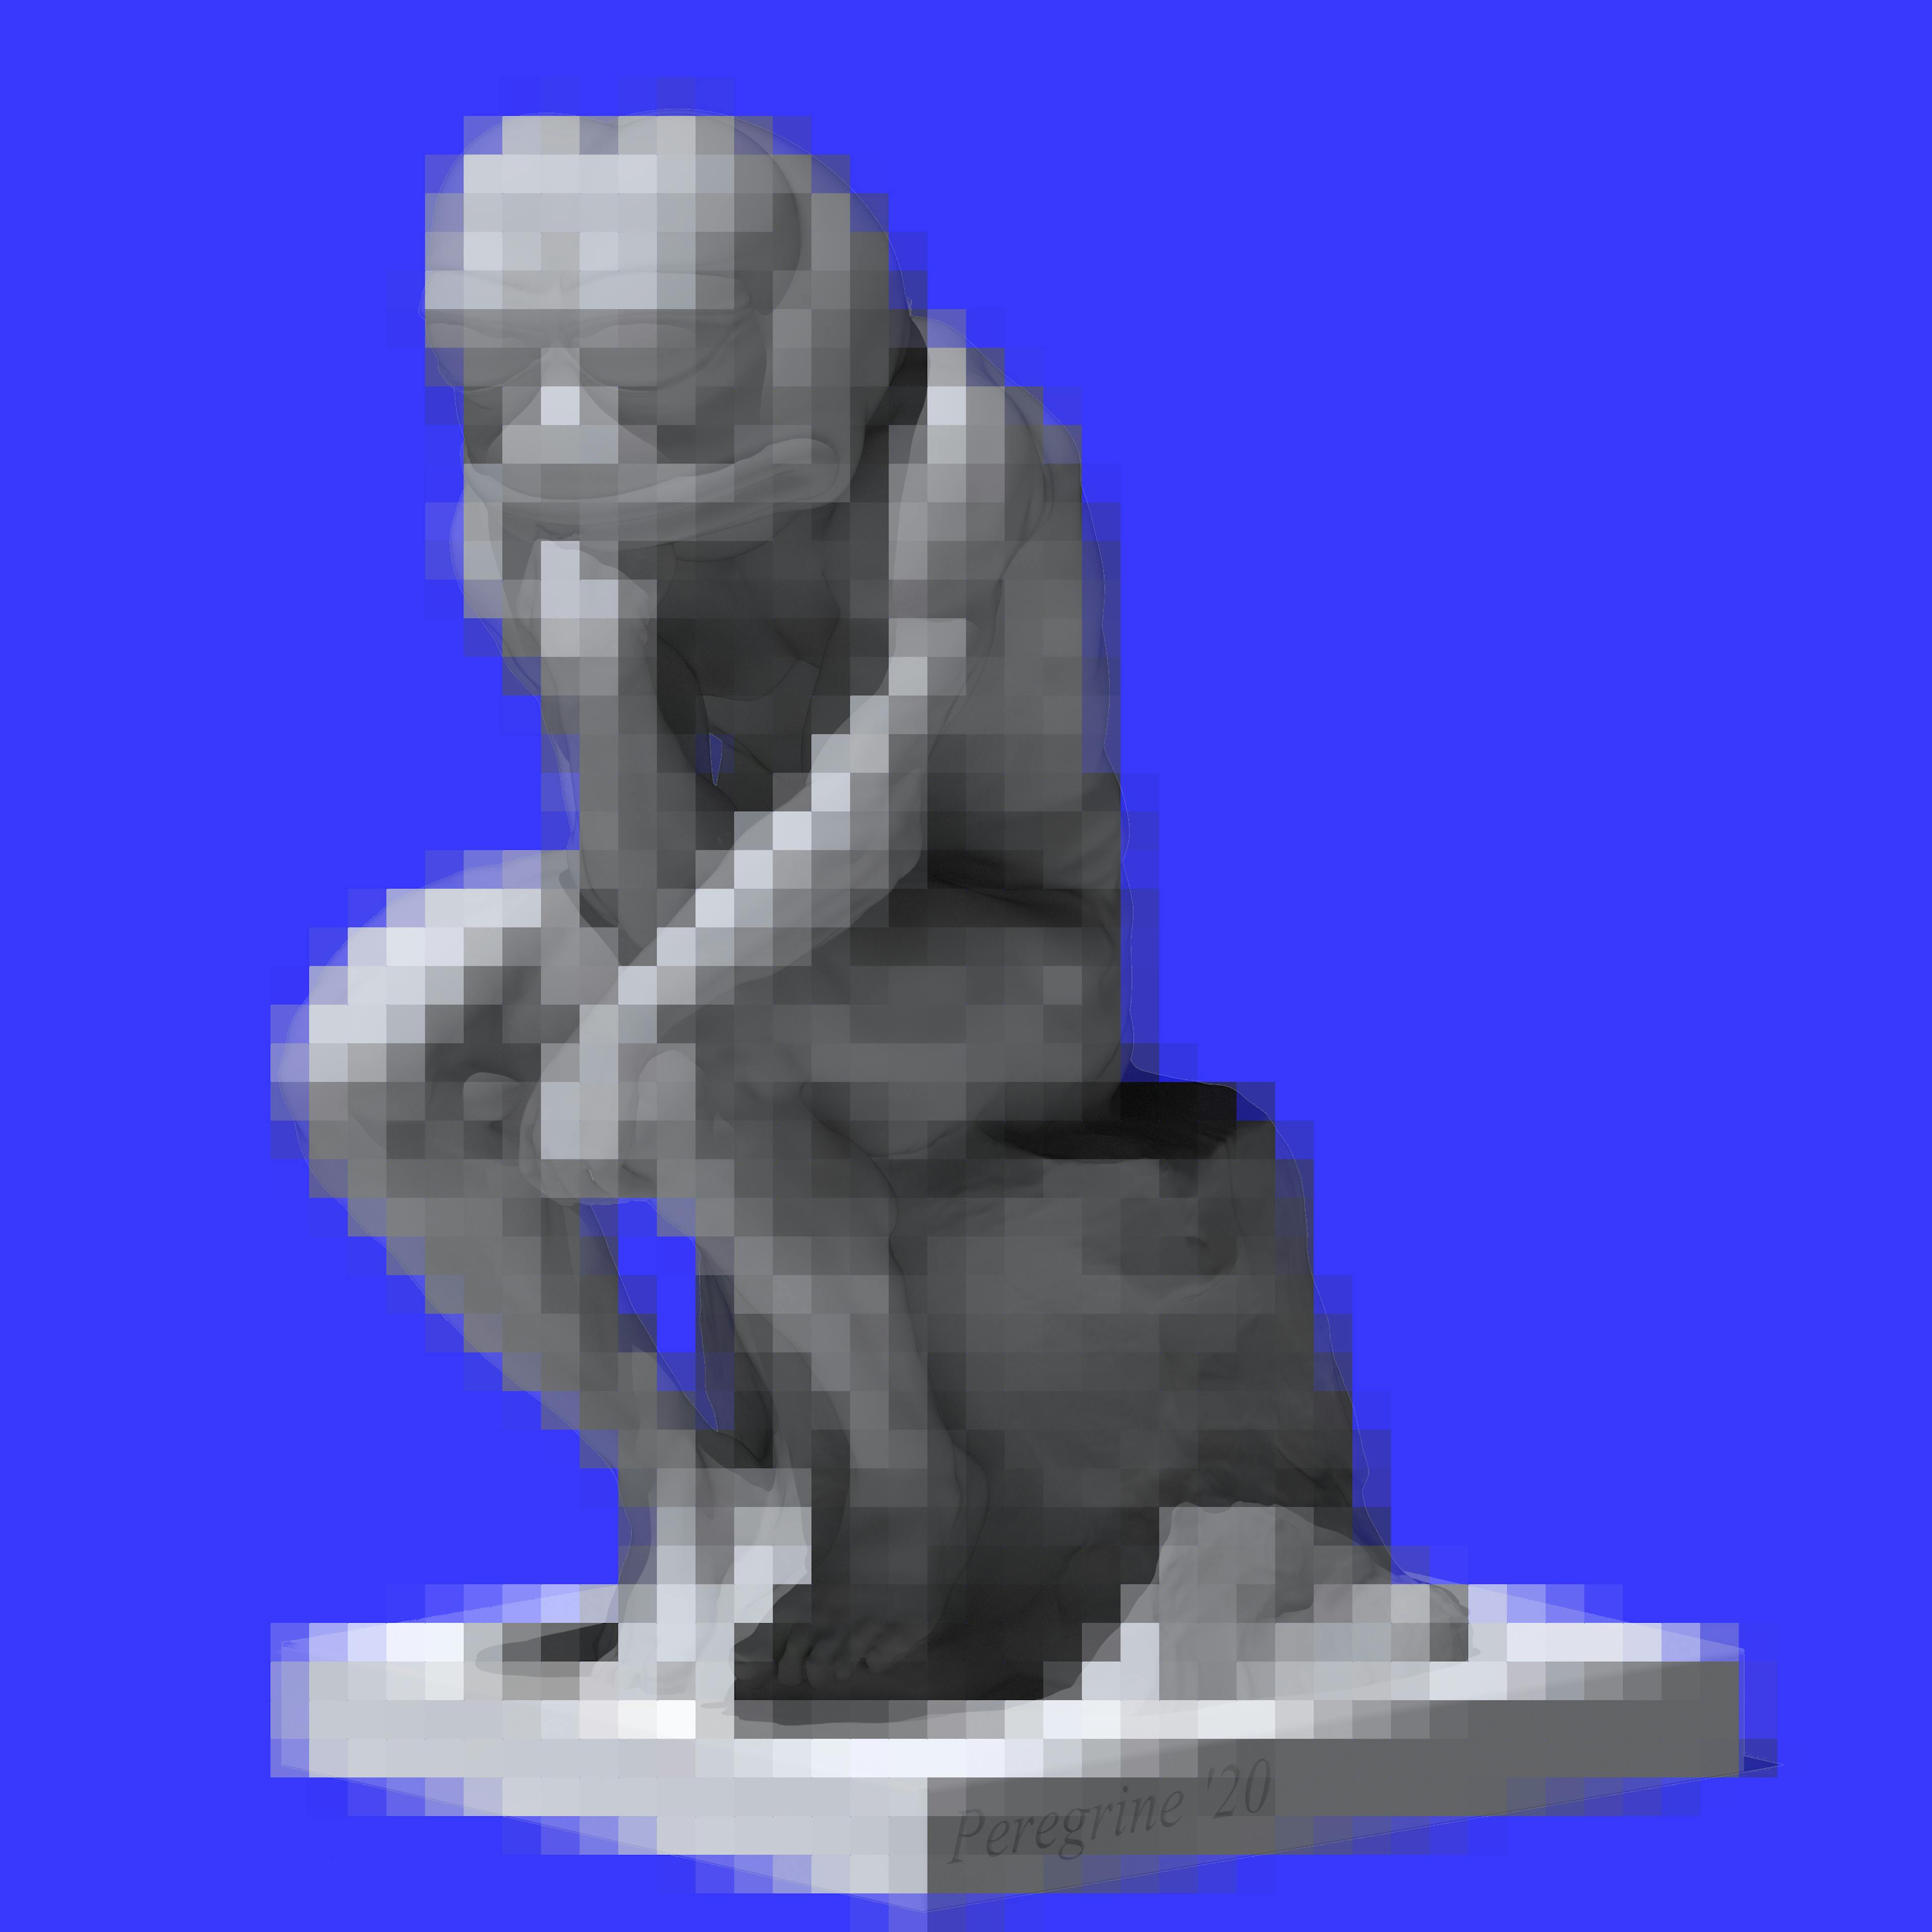 Rodin's Thinking Pepe - An NFT by me